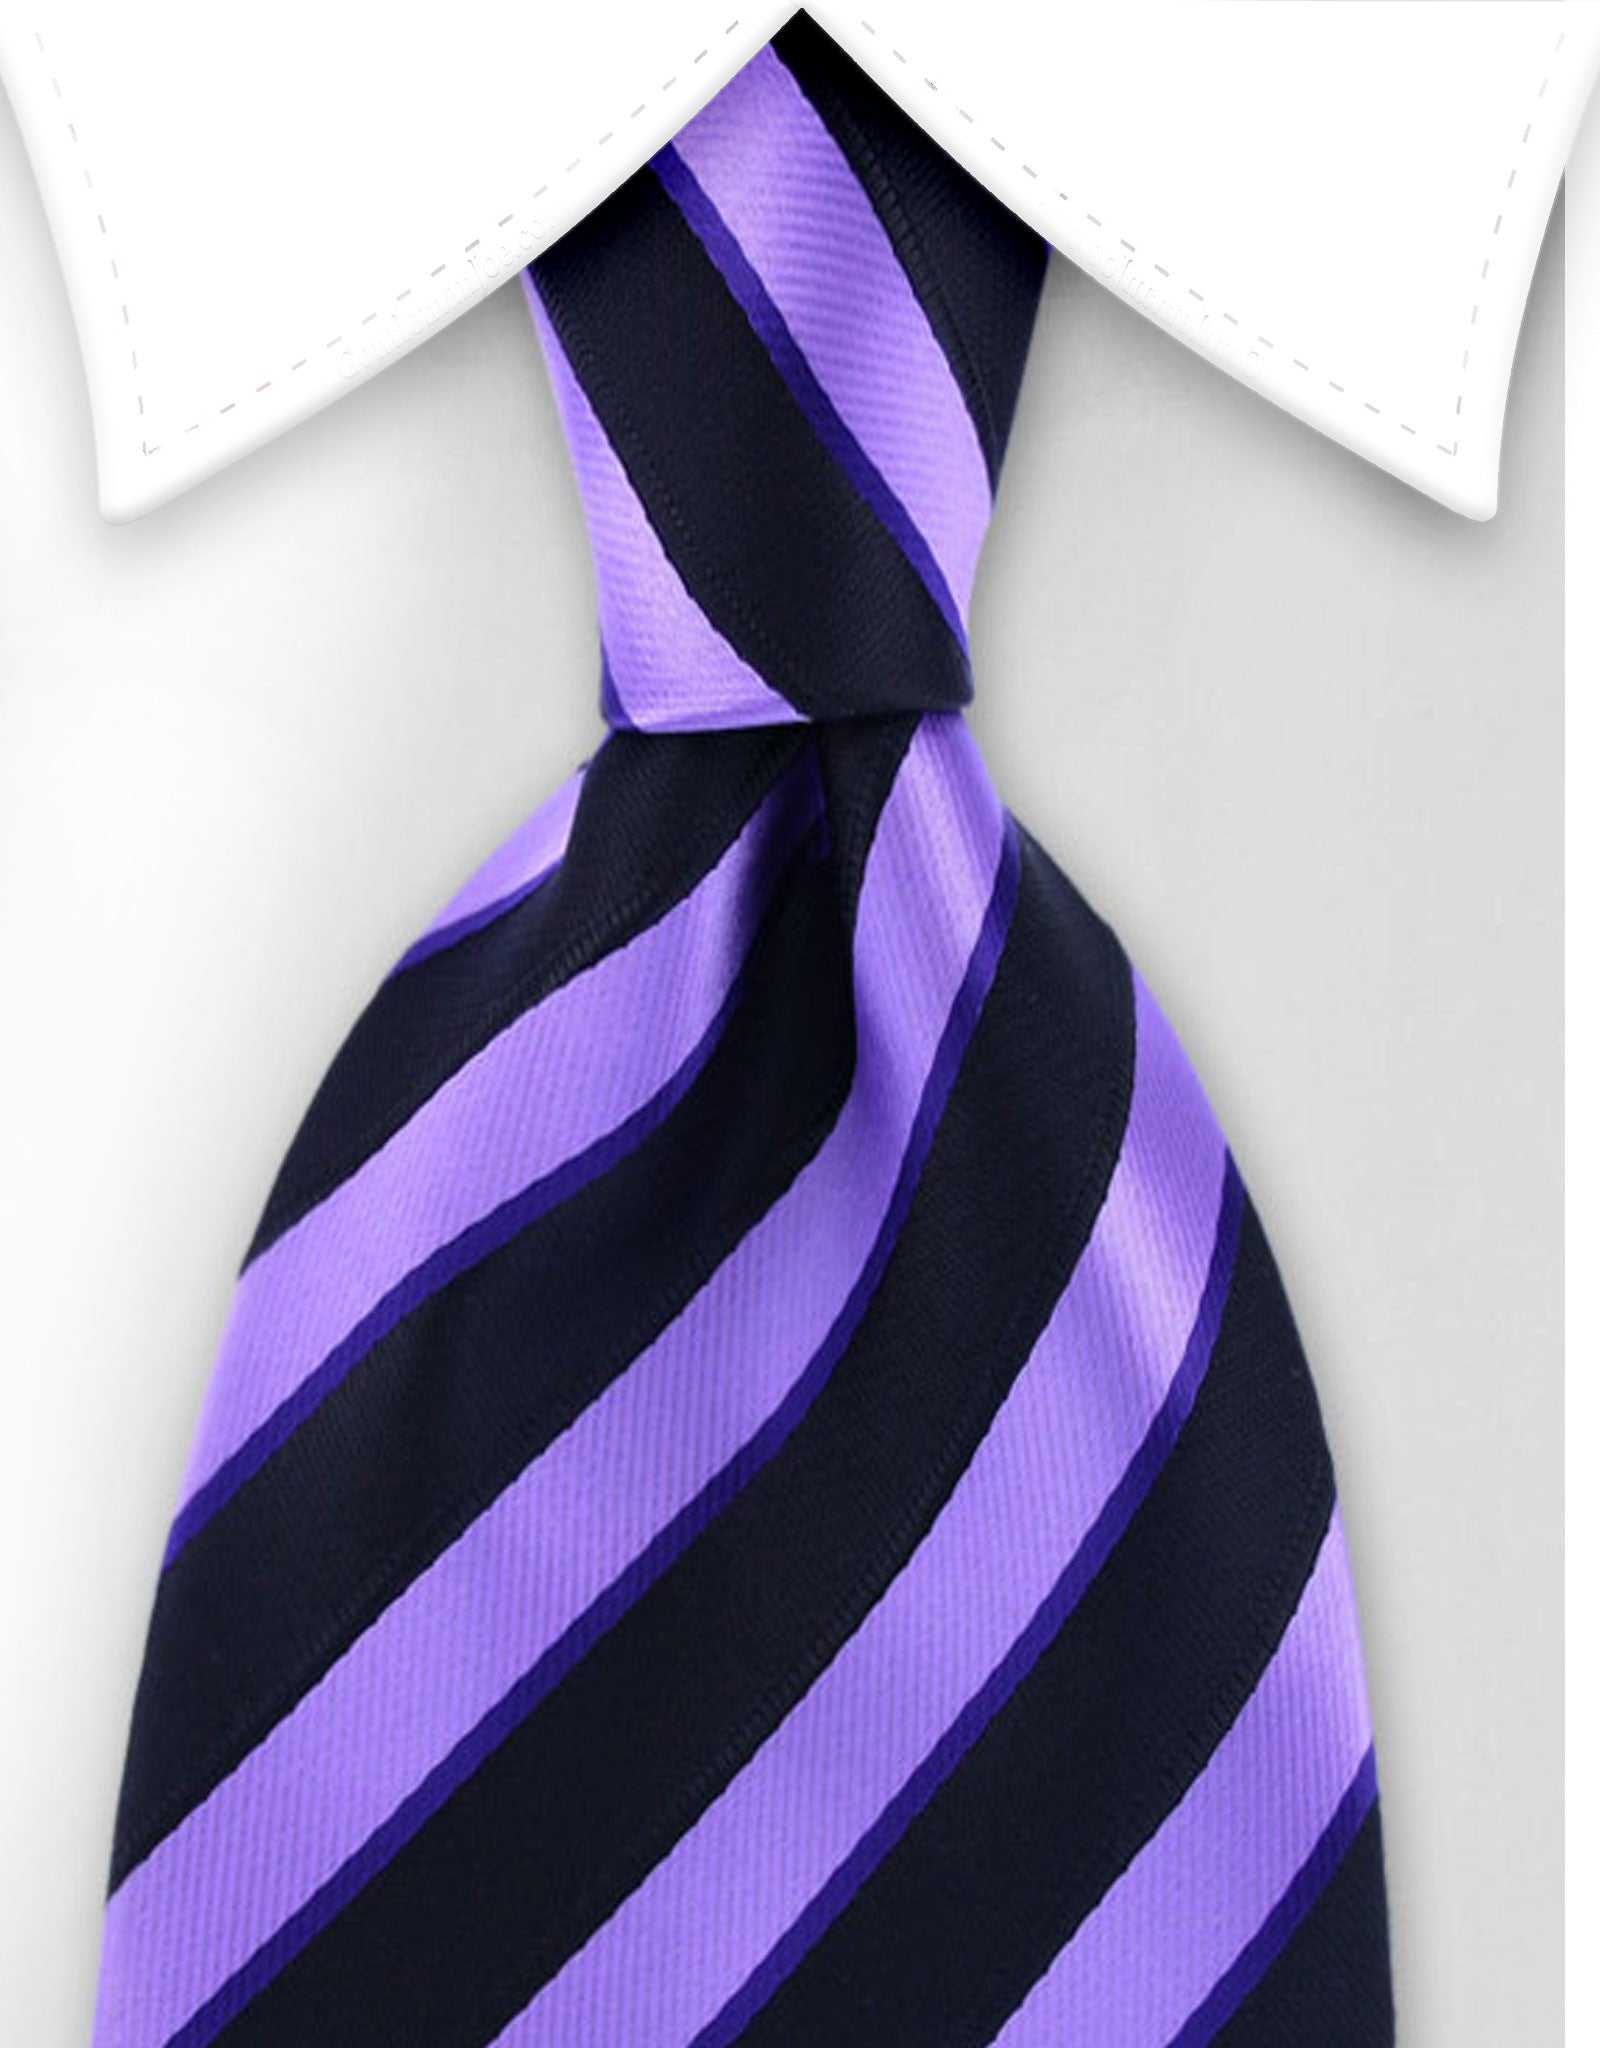 purple and black collegiate tie